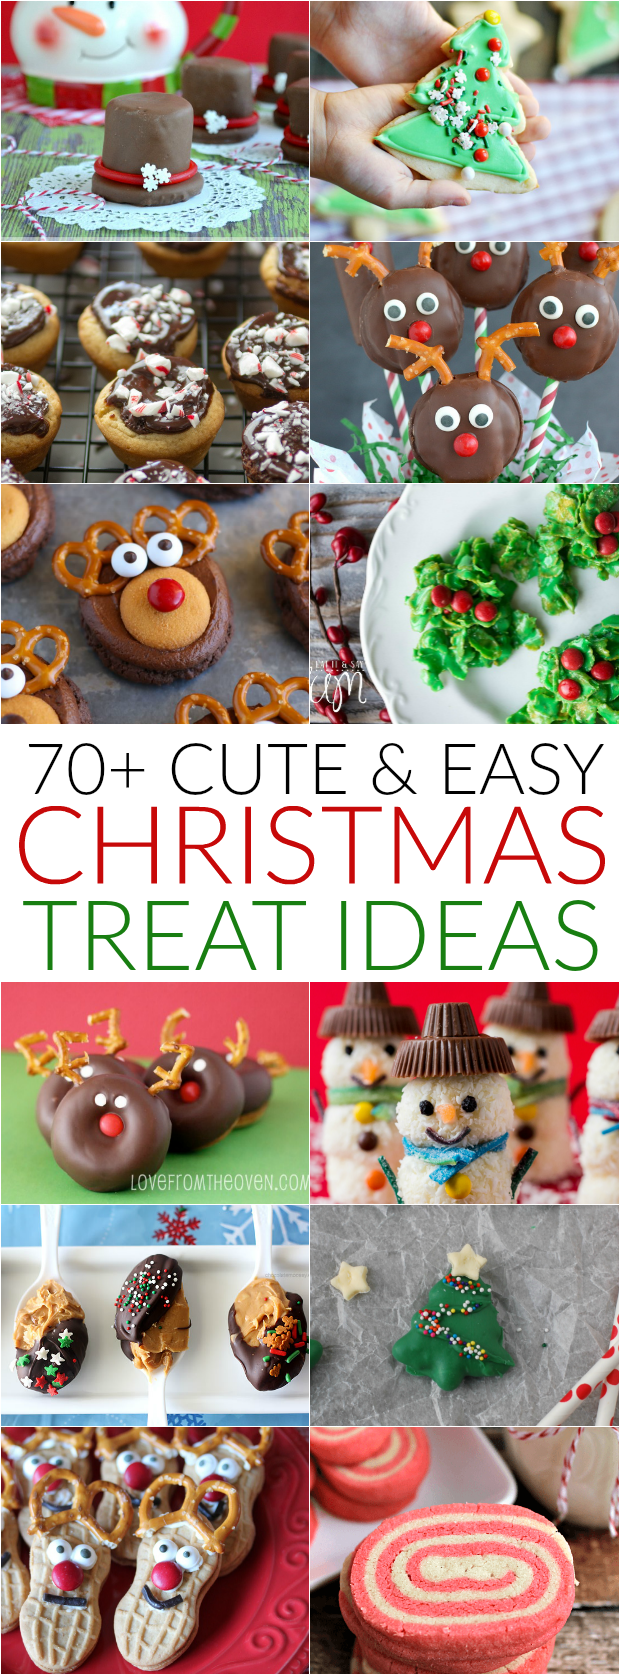 19 diy Christmas food ideas